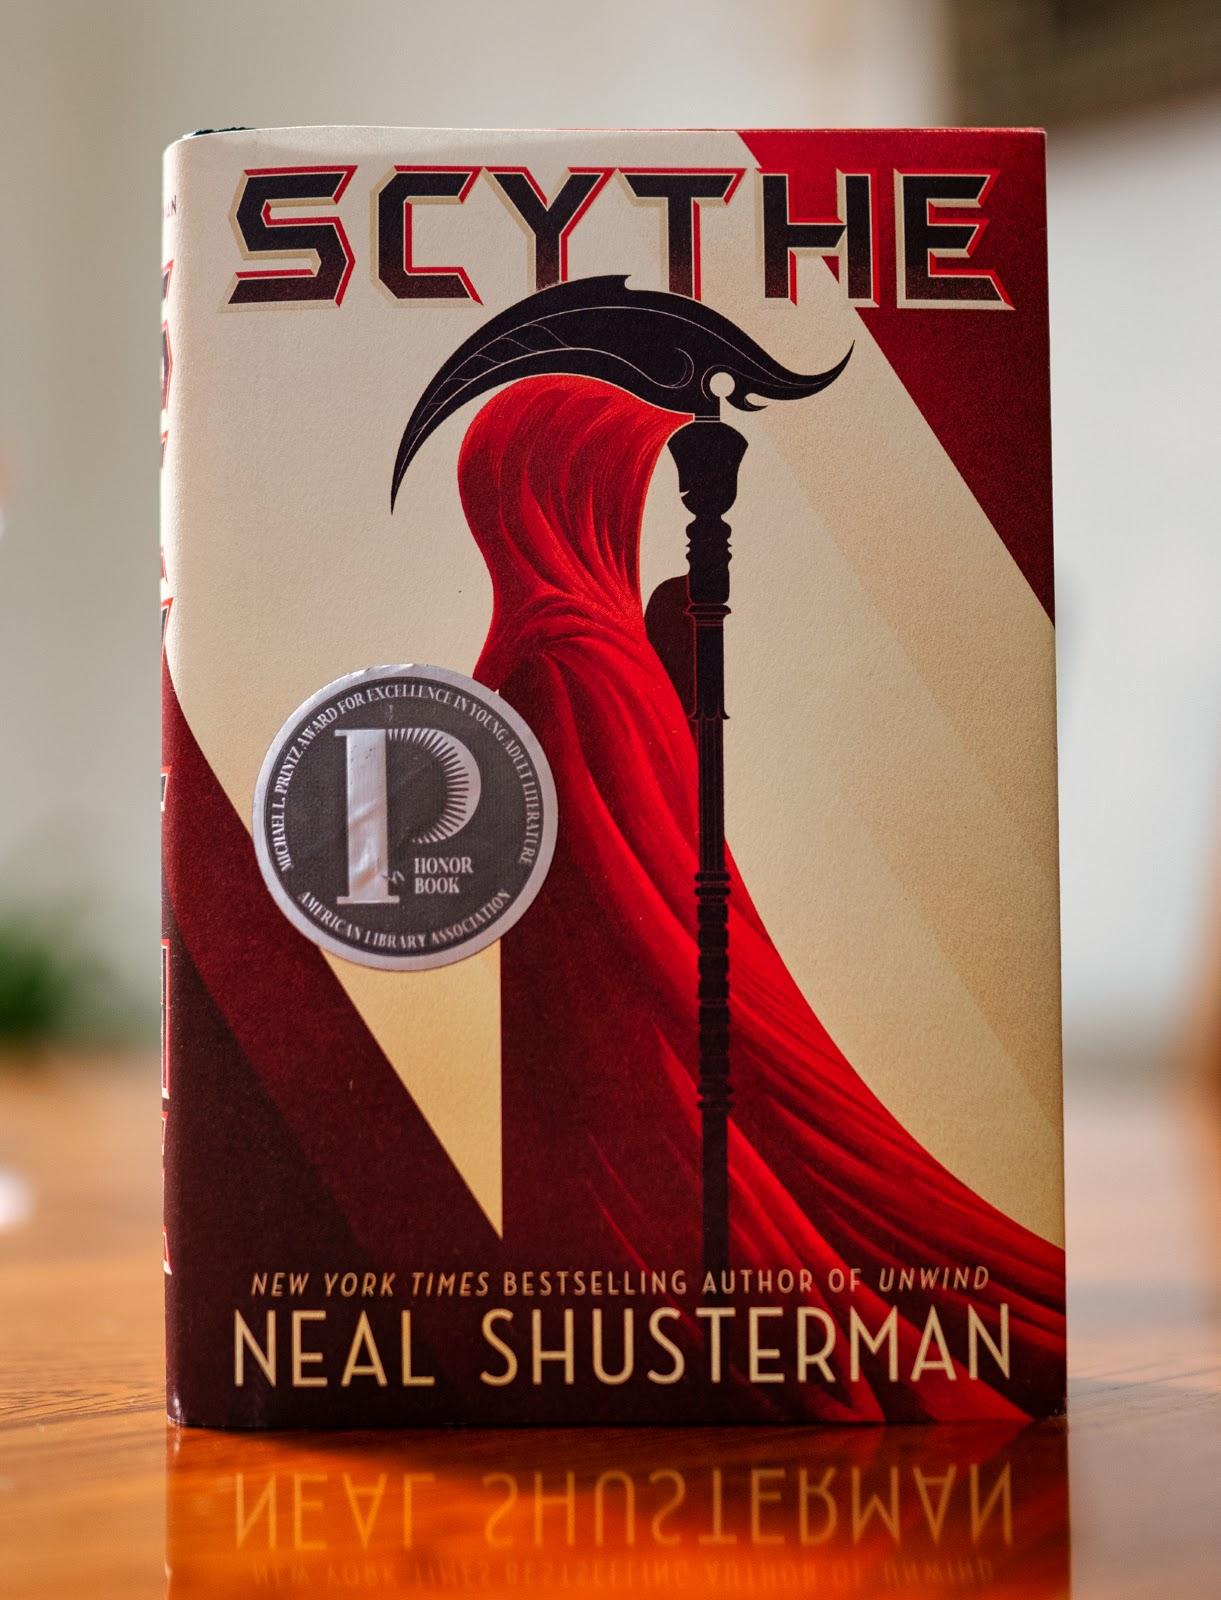 scythe series book 2